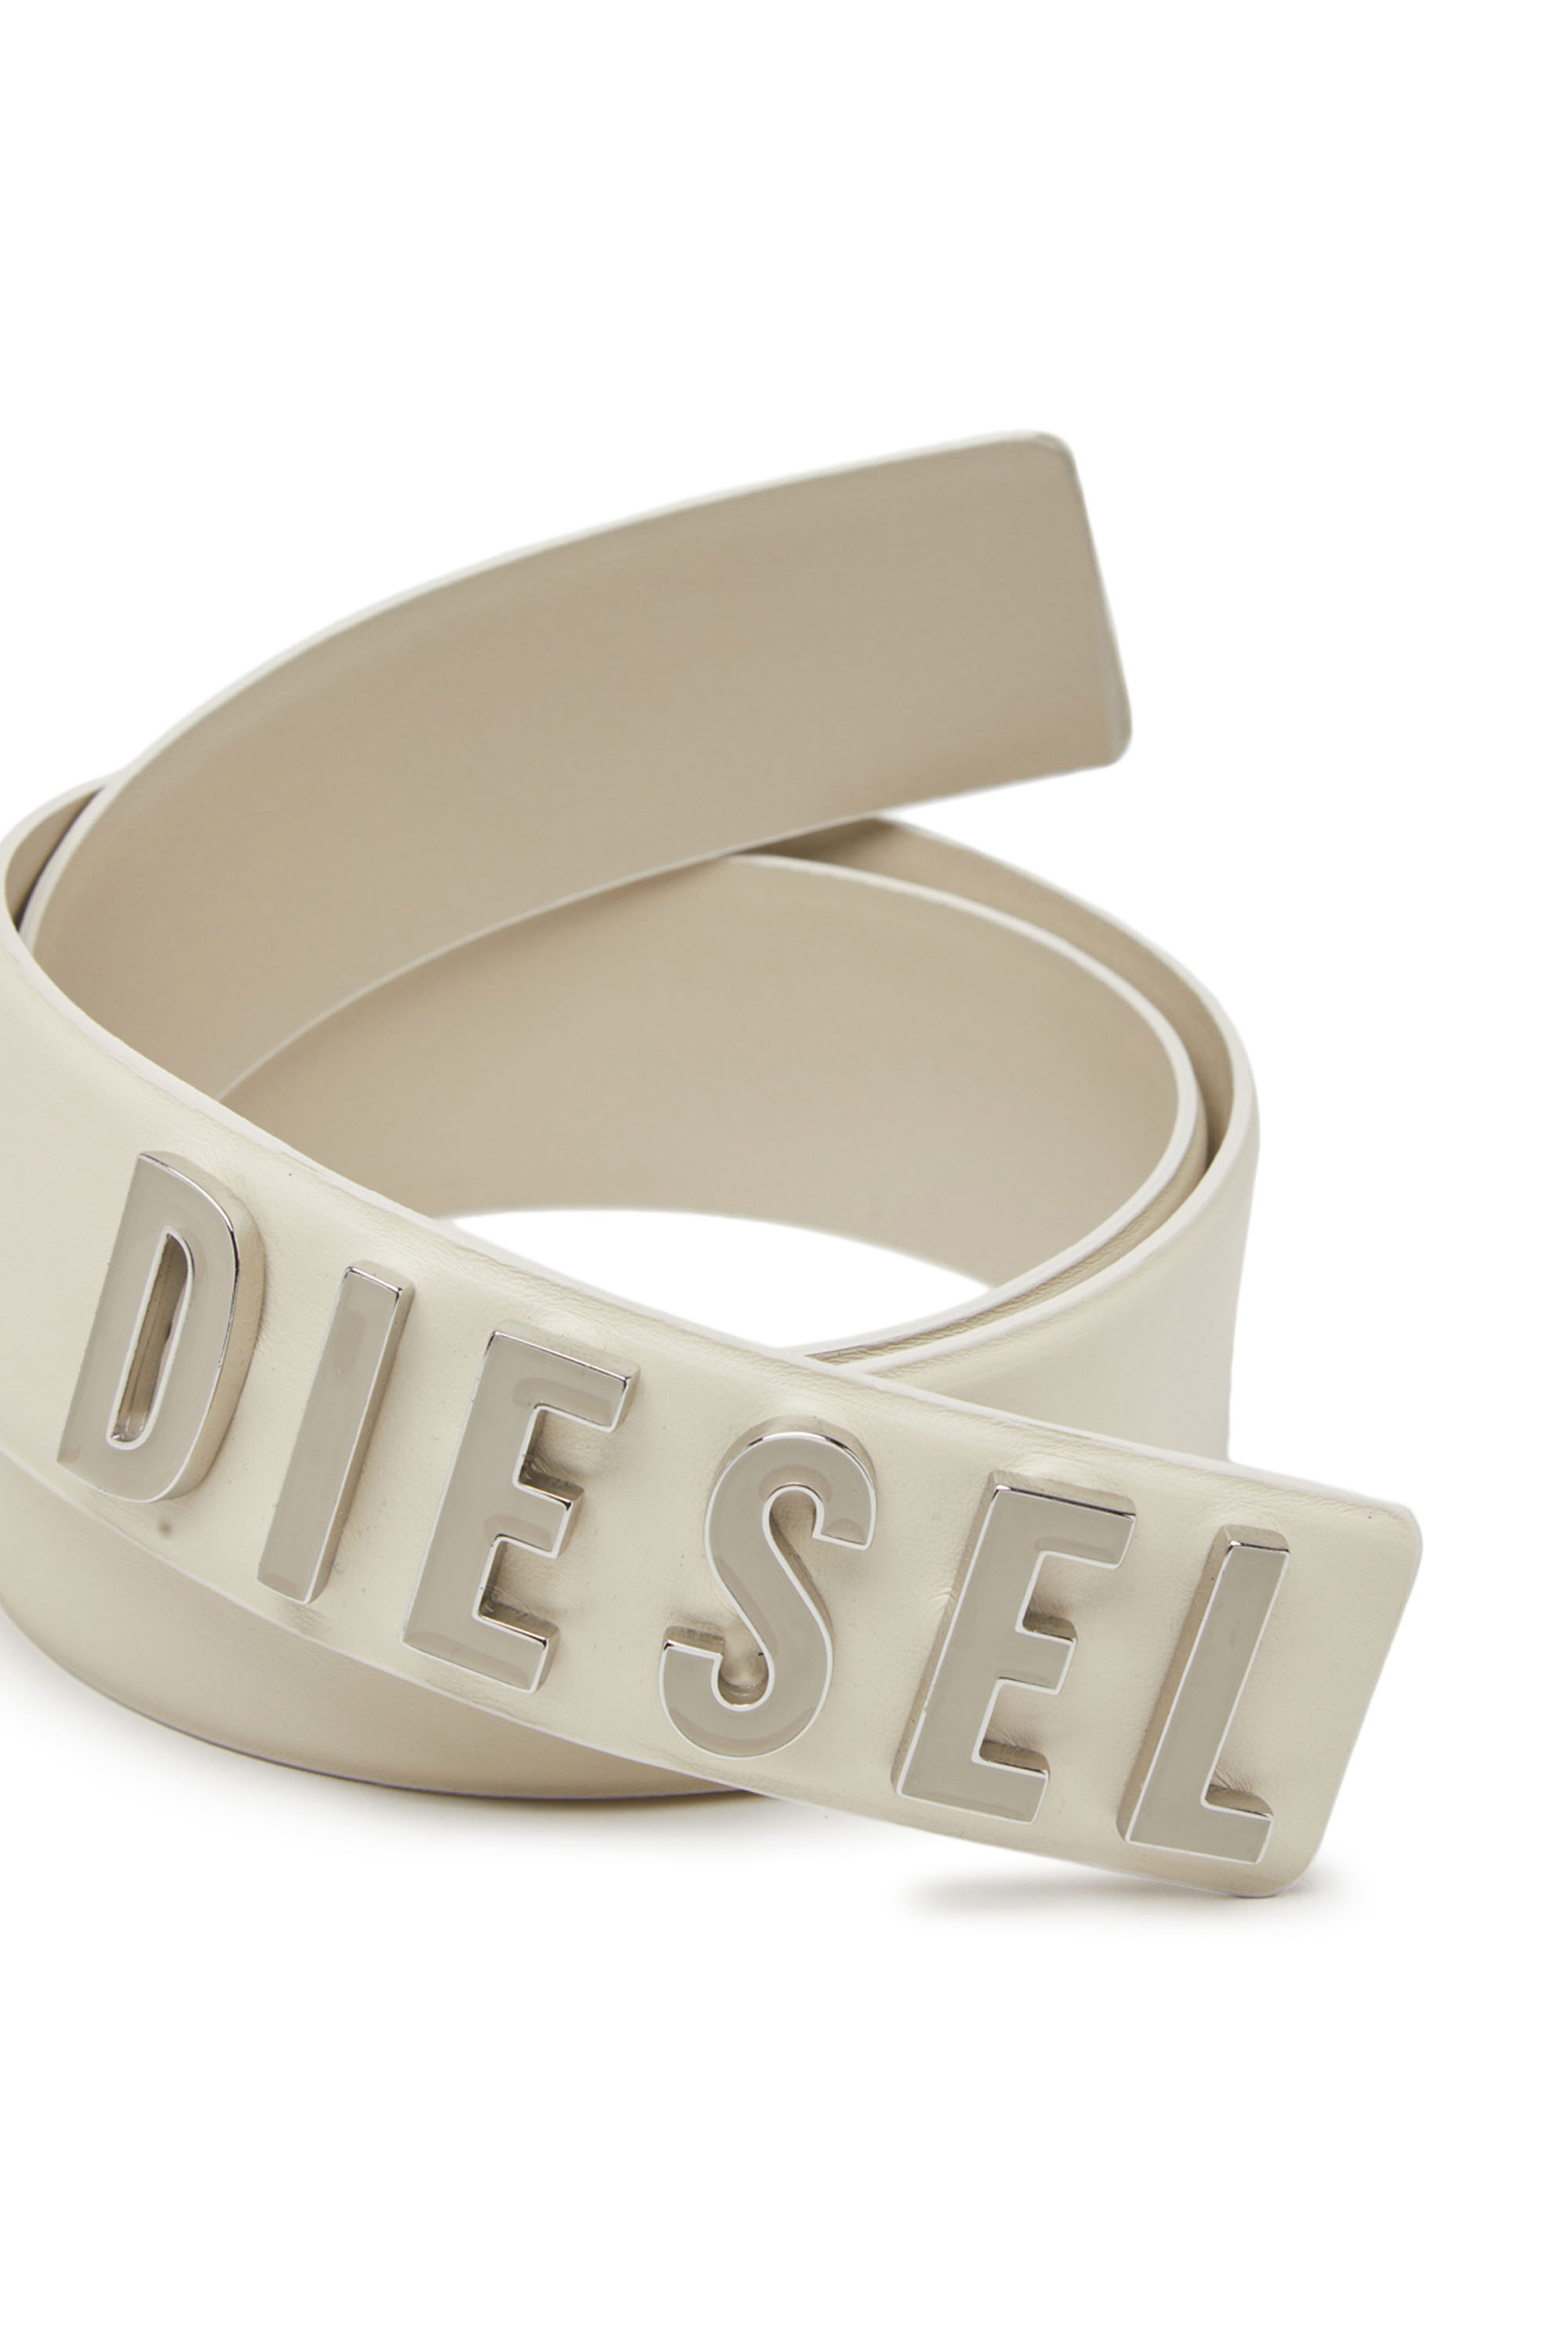 Diesel - B-LETTERS B, White - Image 3